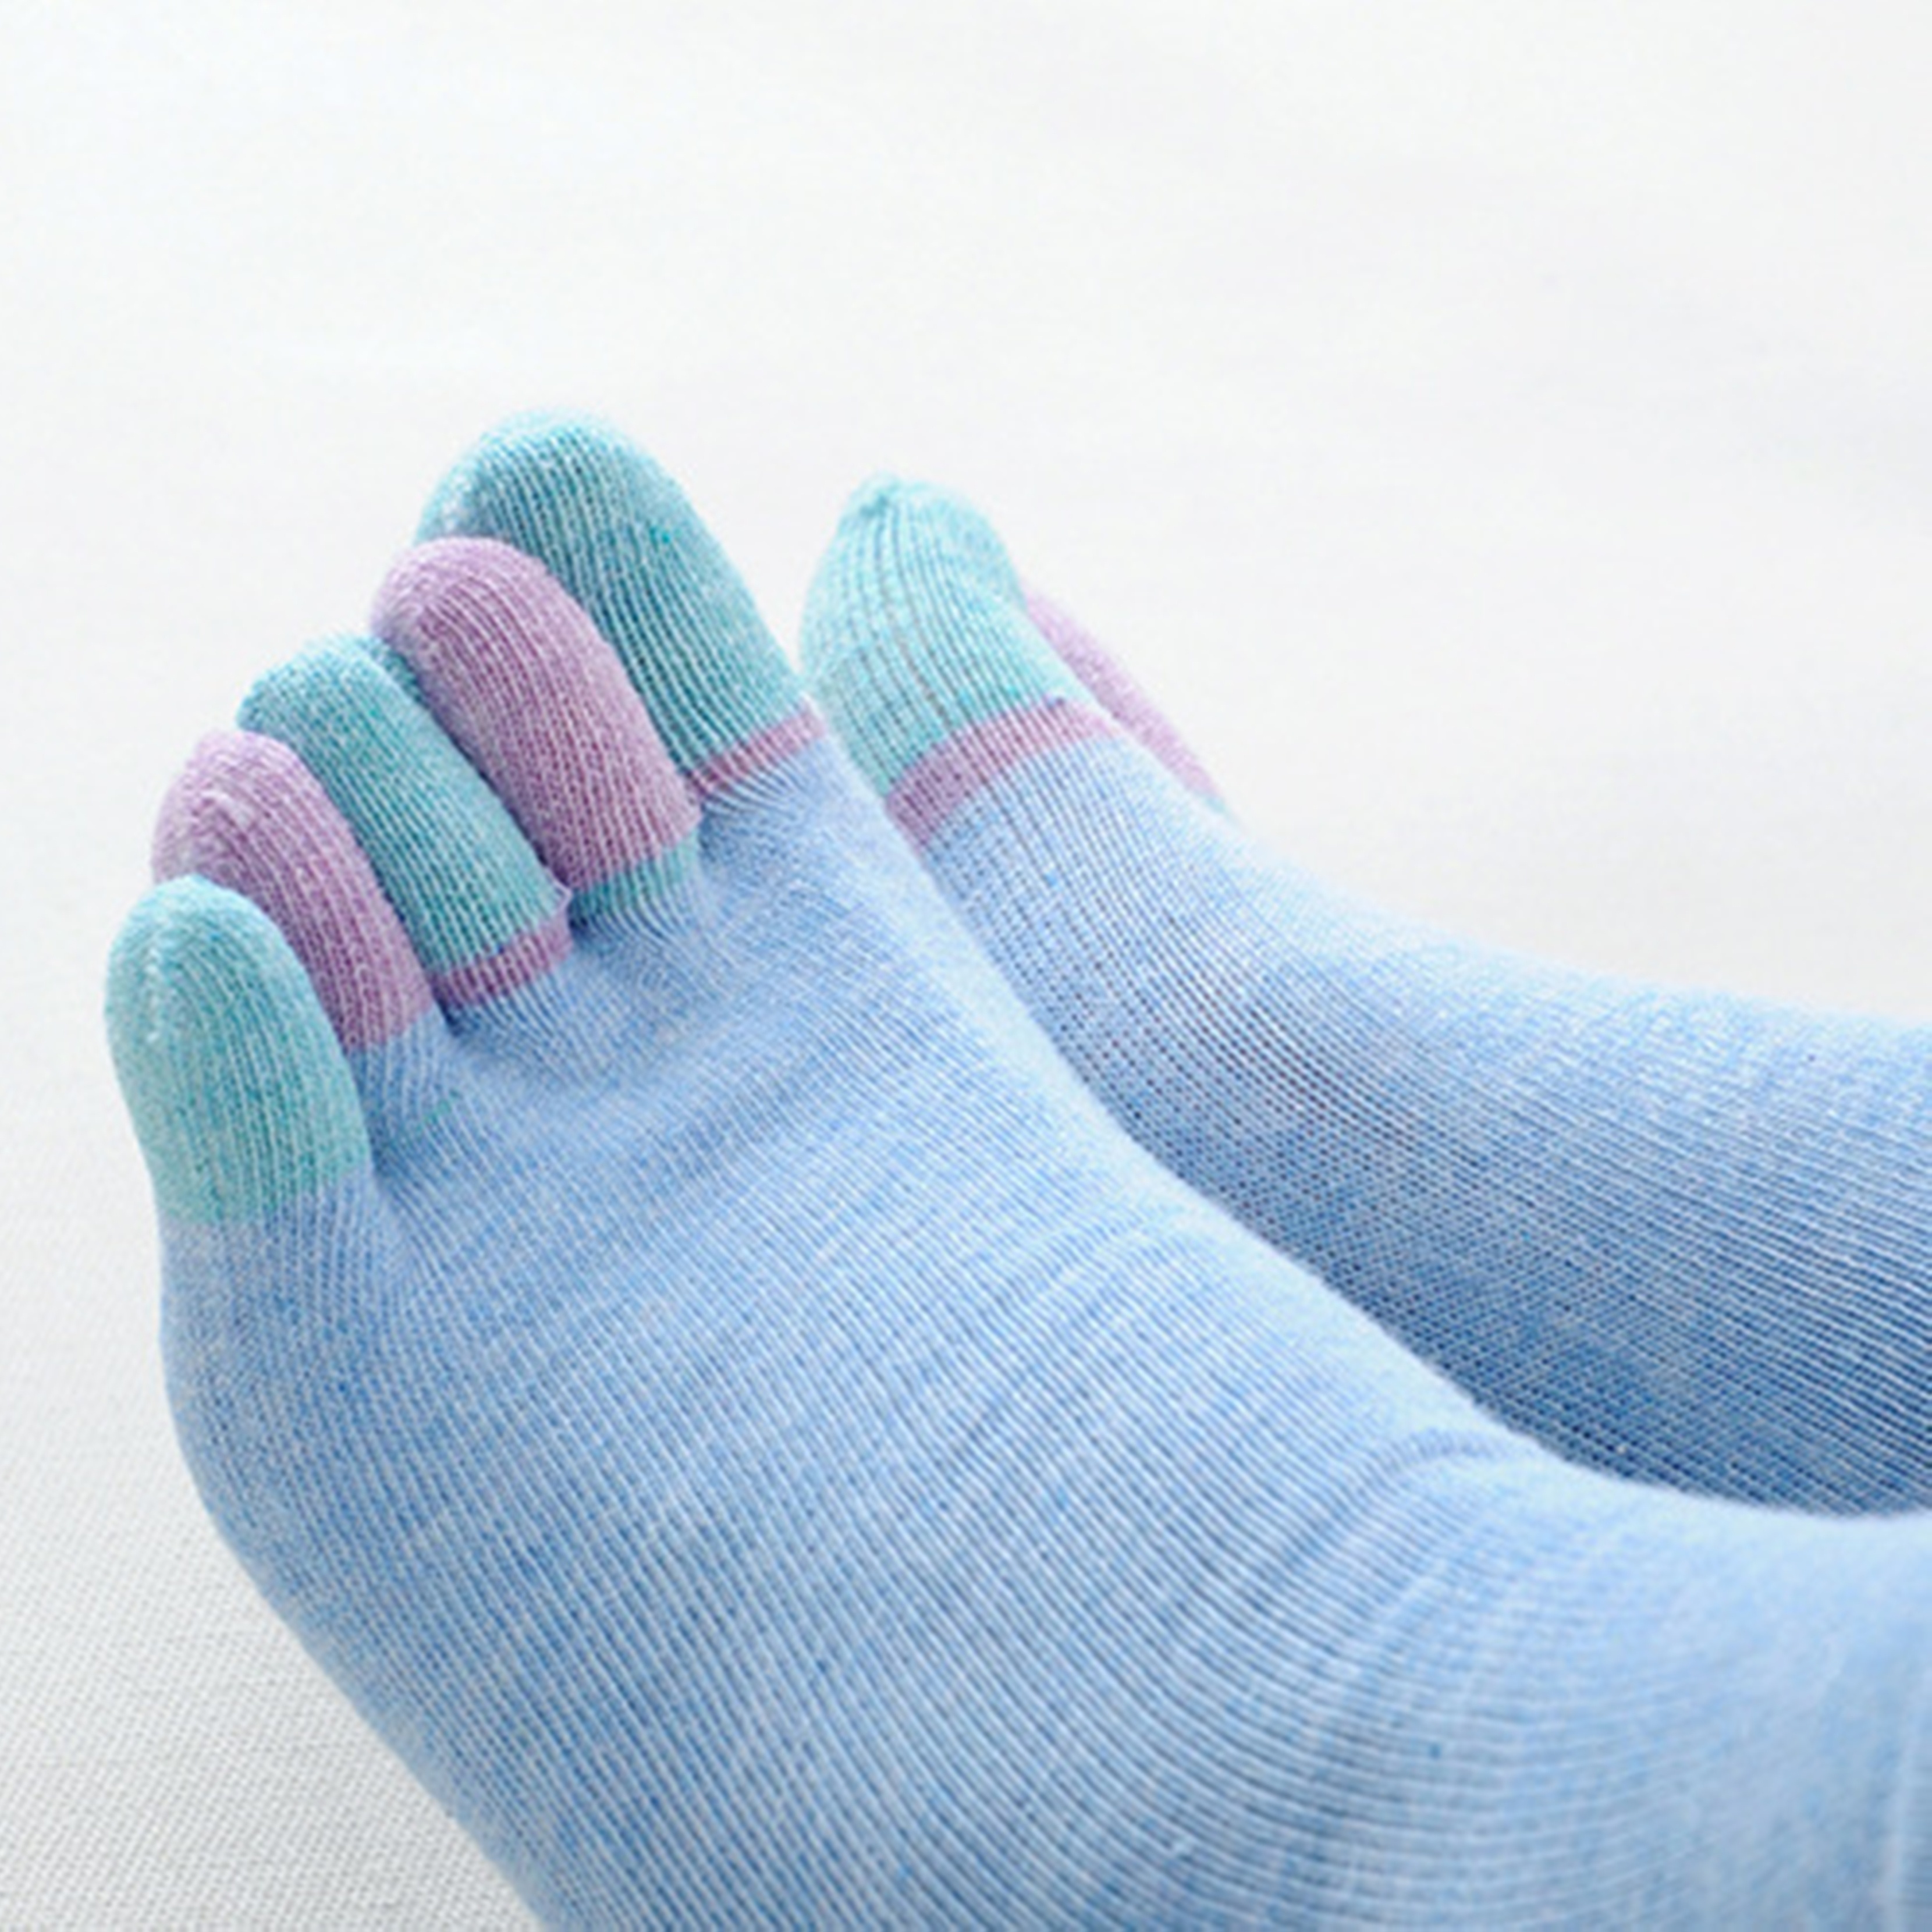 Women's Low Cut Toe Socks Ankle Cotton Running Socks(Pack of 5/6)